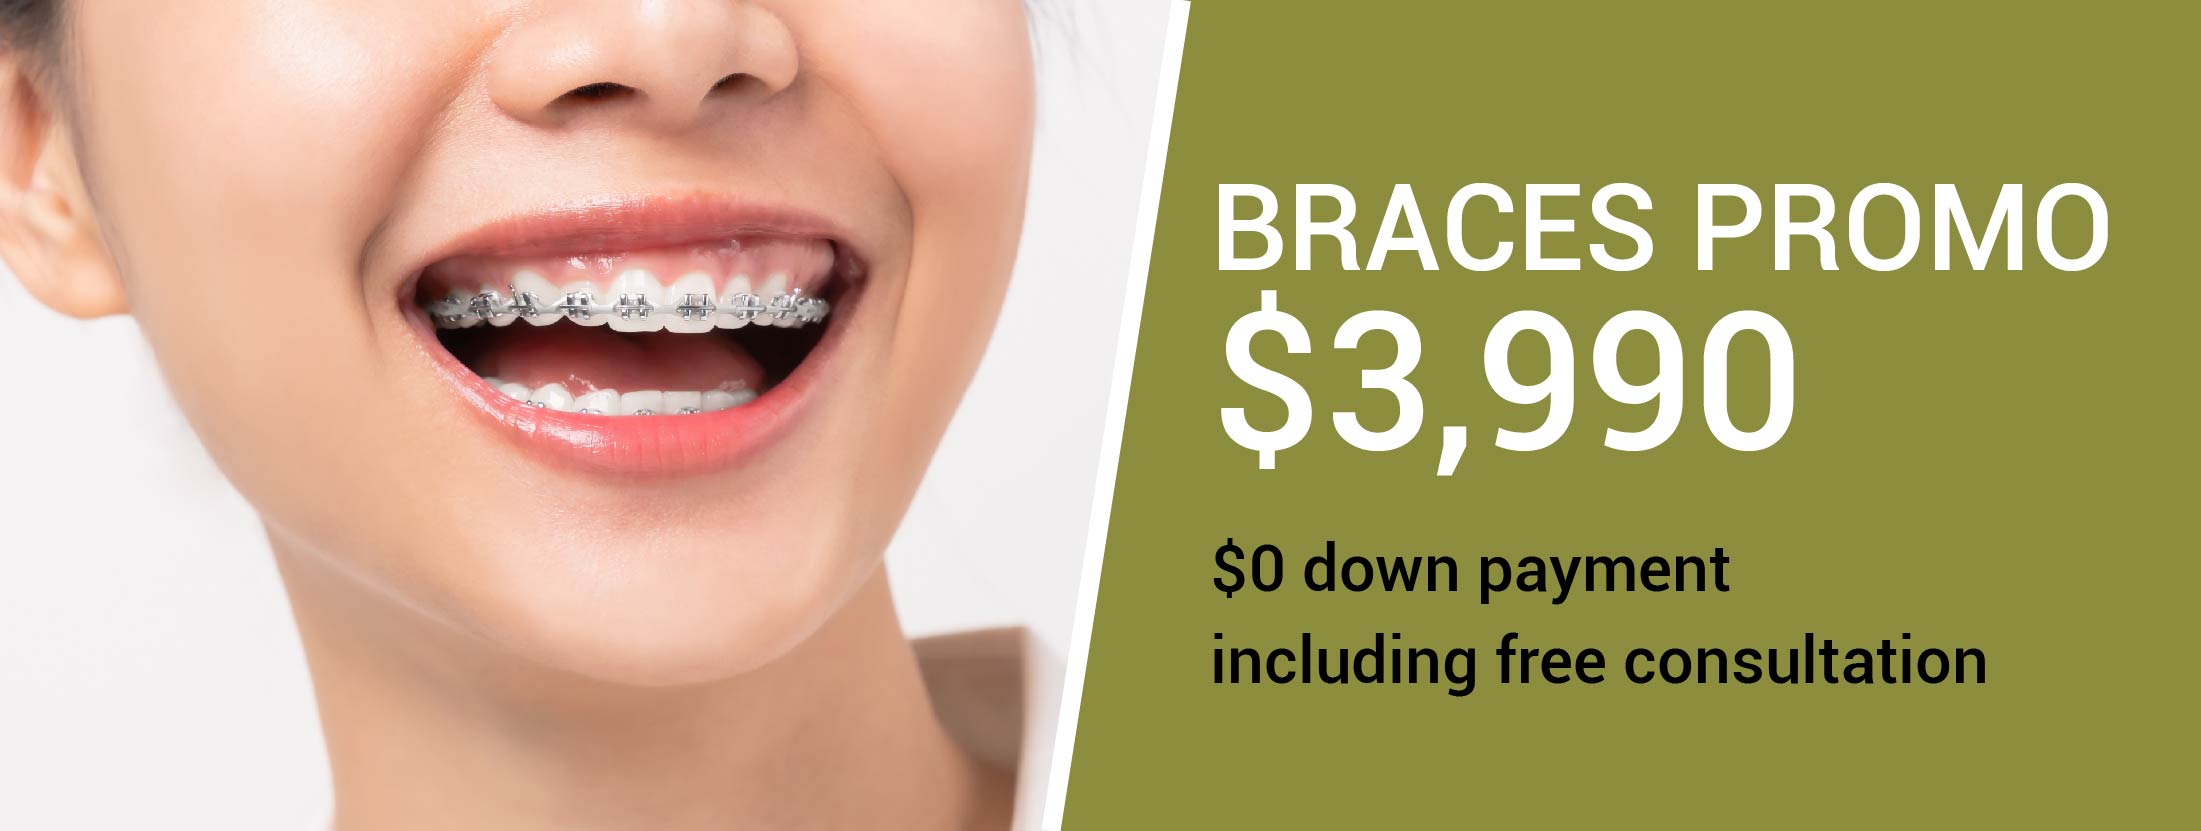 dental braces promotion in mississauga